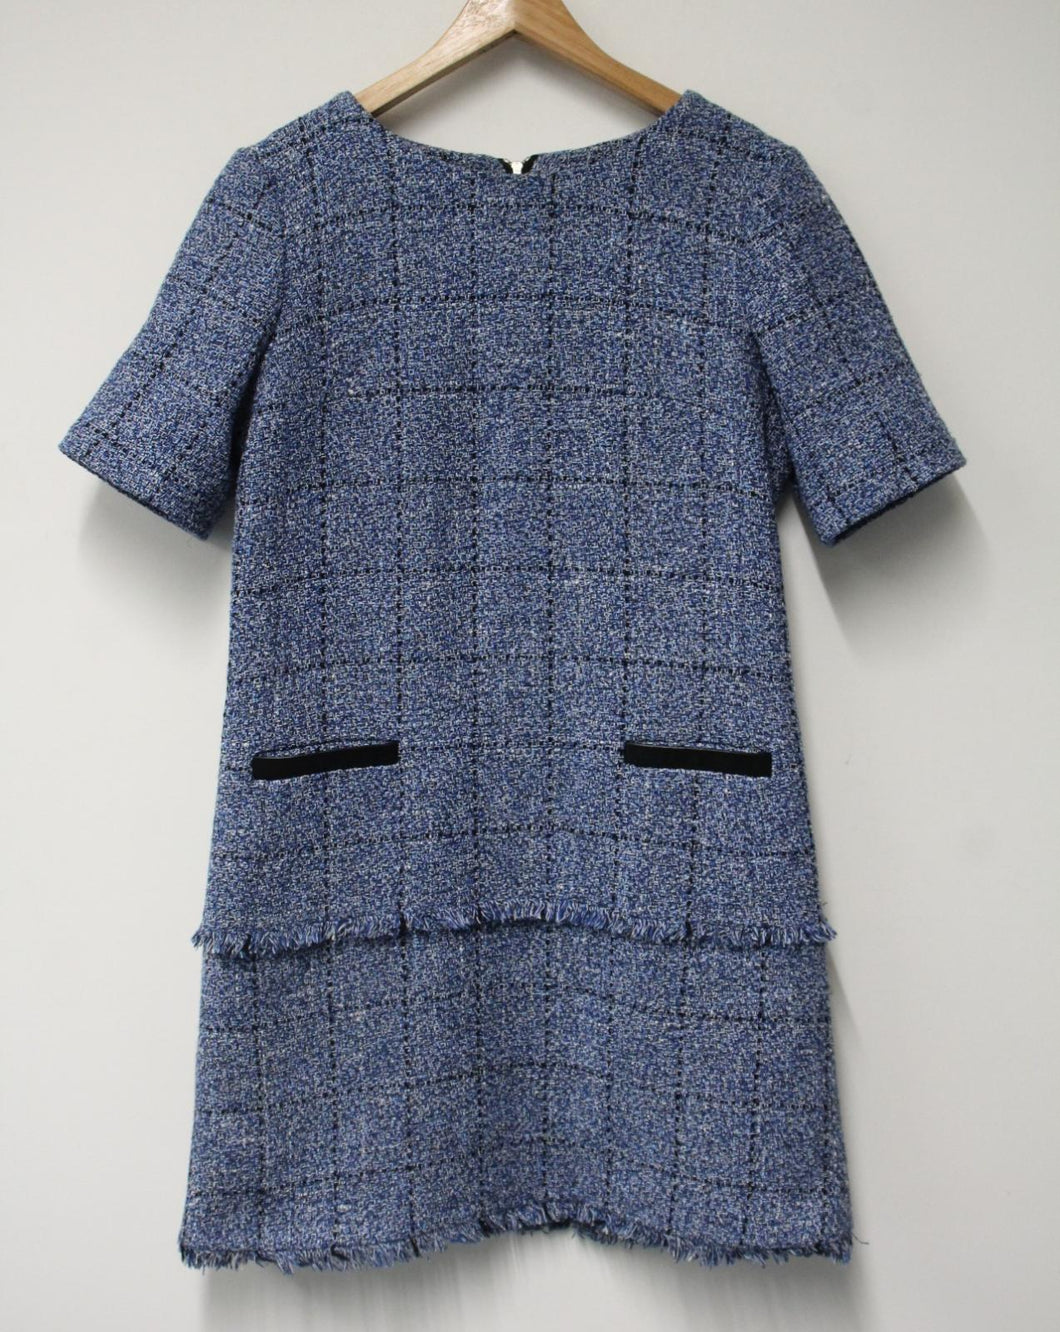 CLAUDIE PIERLOT Ladies Blue Tweed Cotton Blend Mini Dress Size EU38 UK10